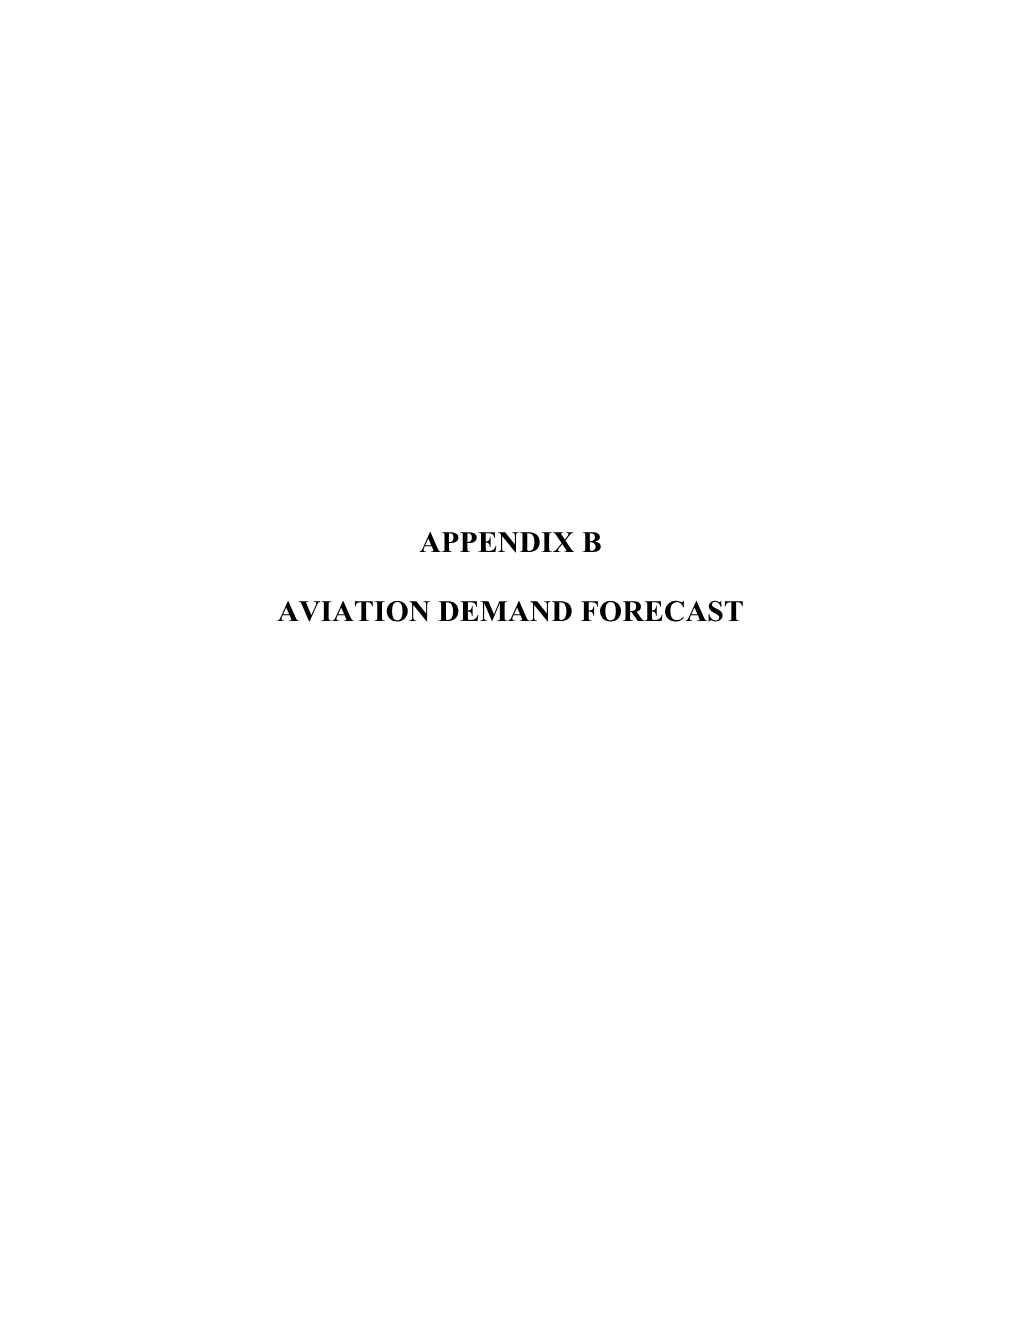 Appendix B Aviation Demand Forecast